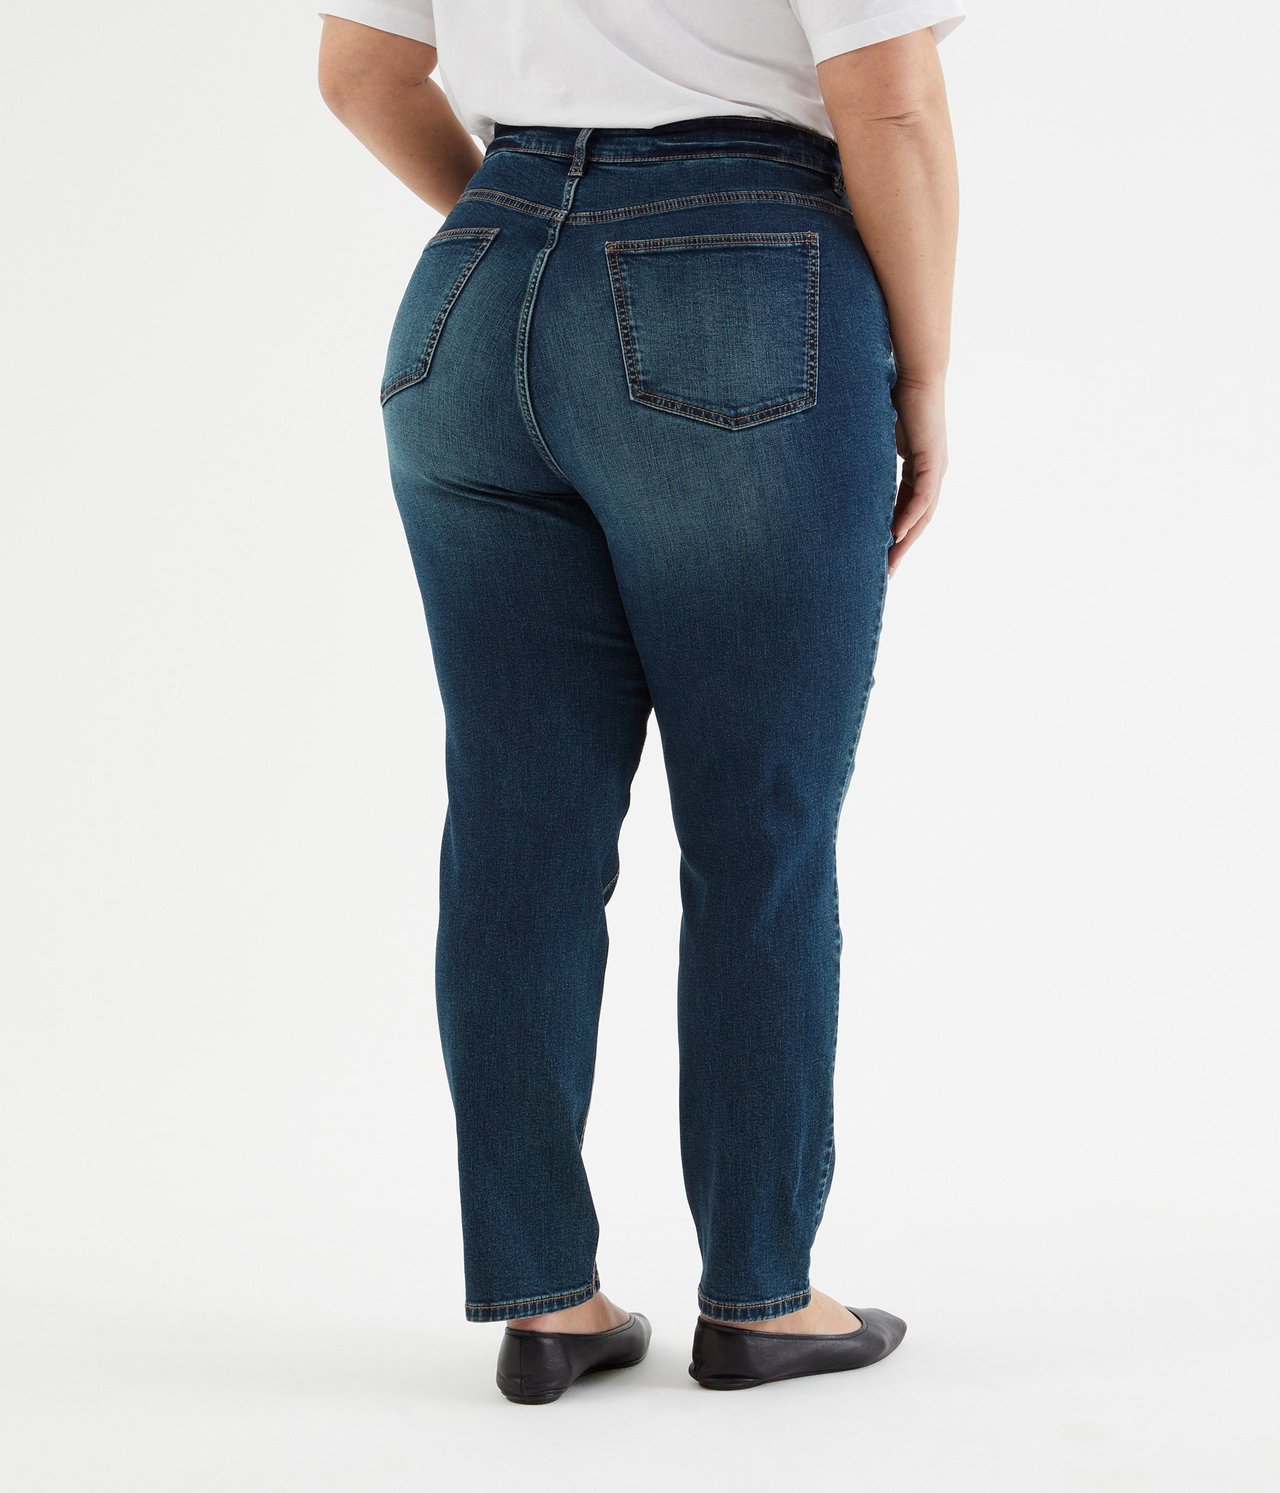 Jenny jeans straight slim fit Denim - 44 - 2